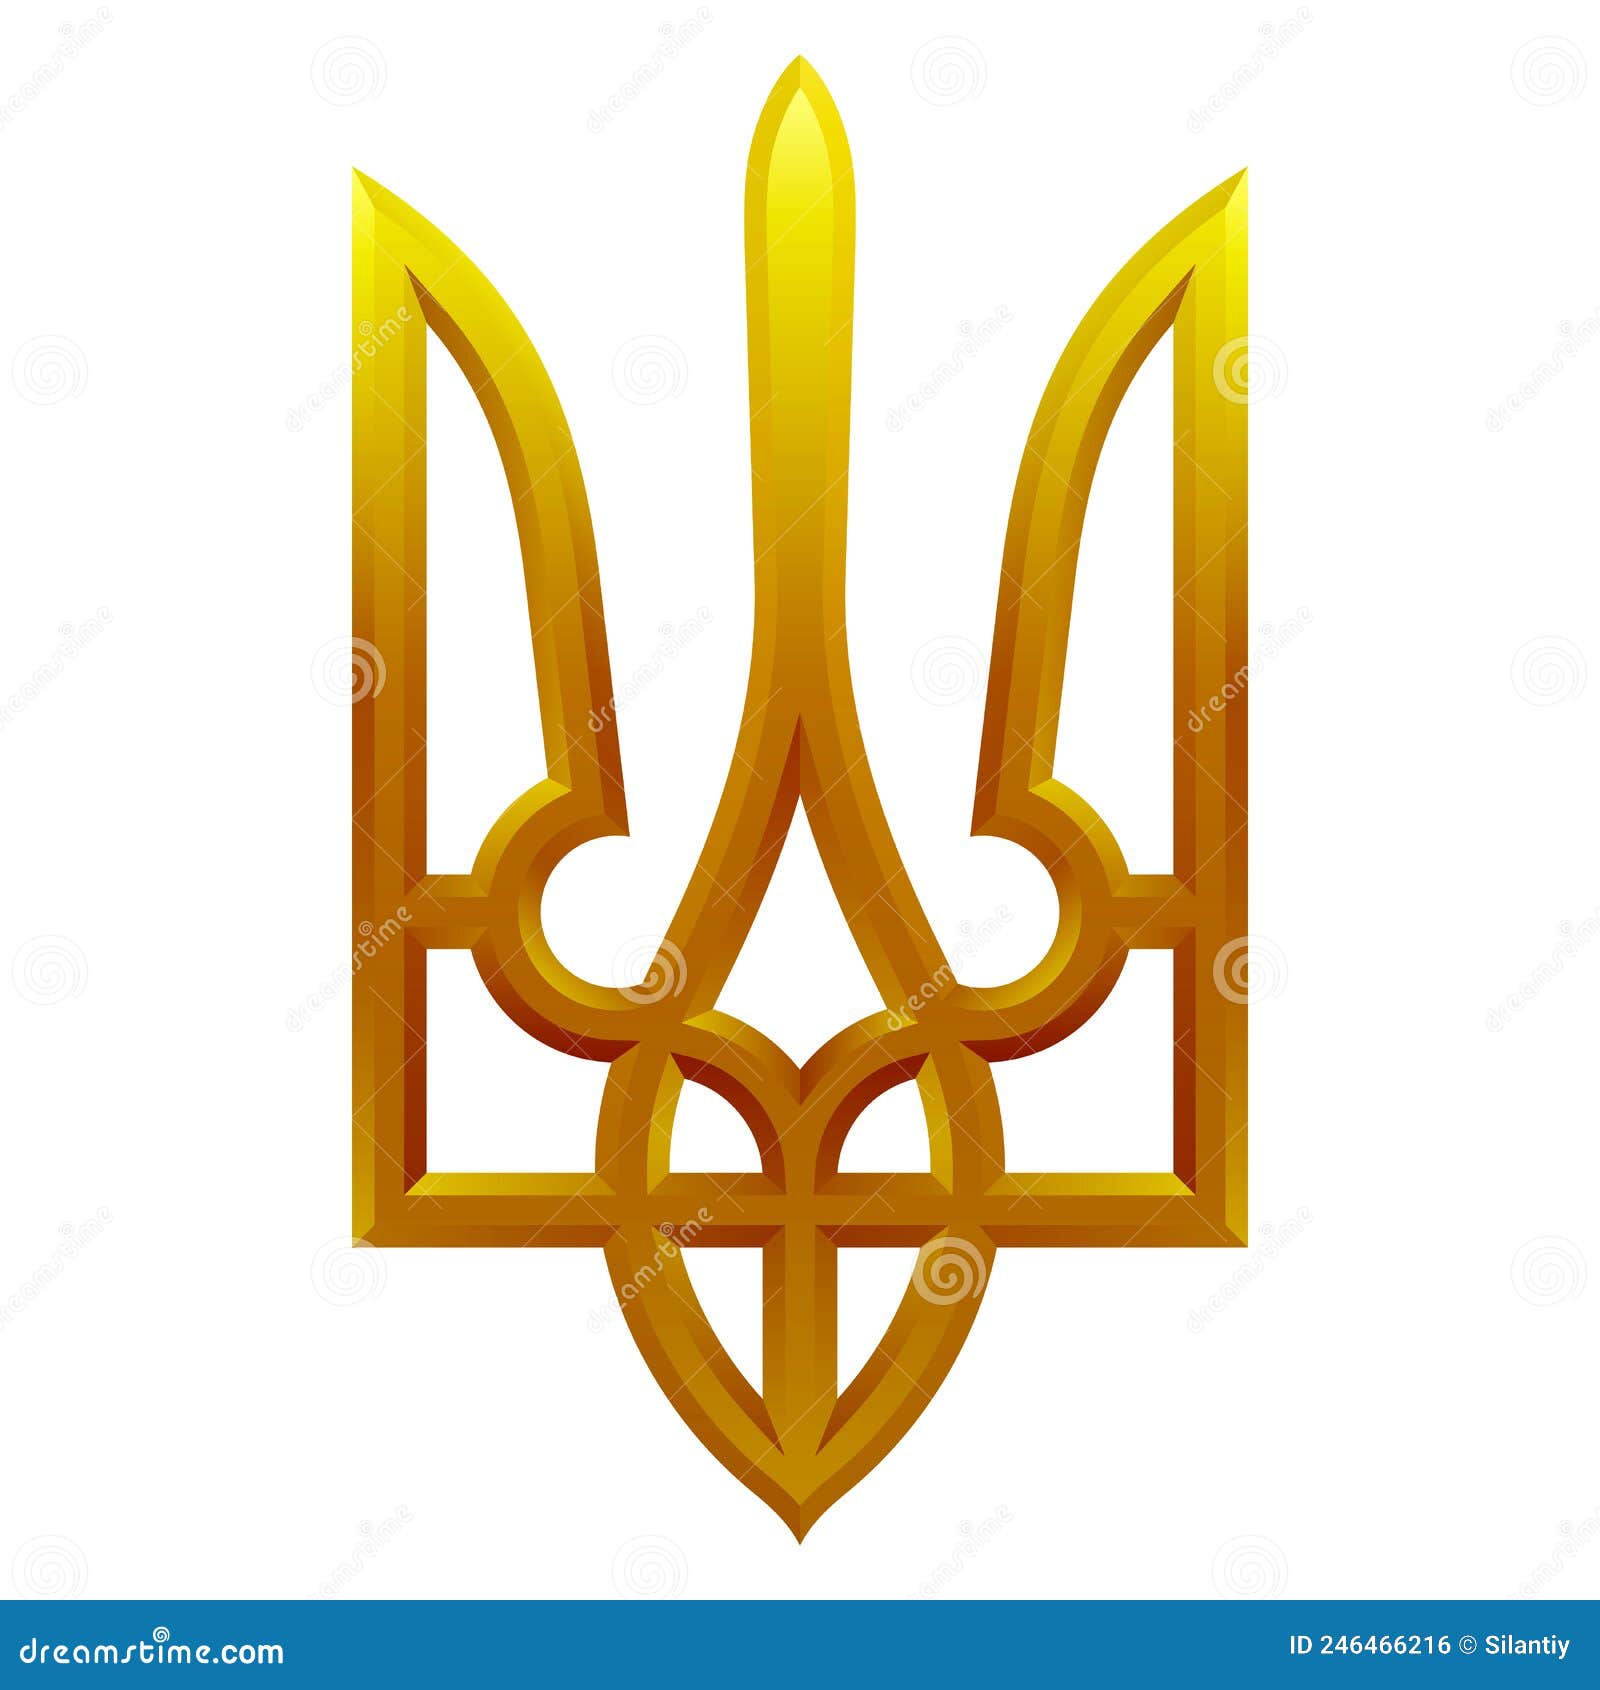 trident,  of ukraine